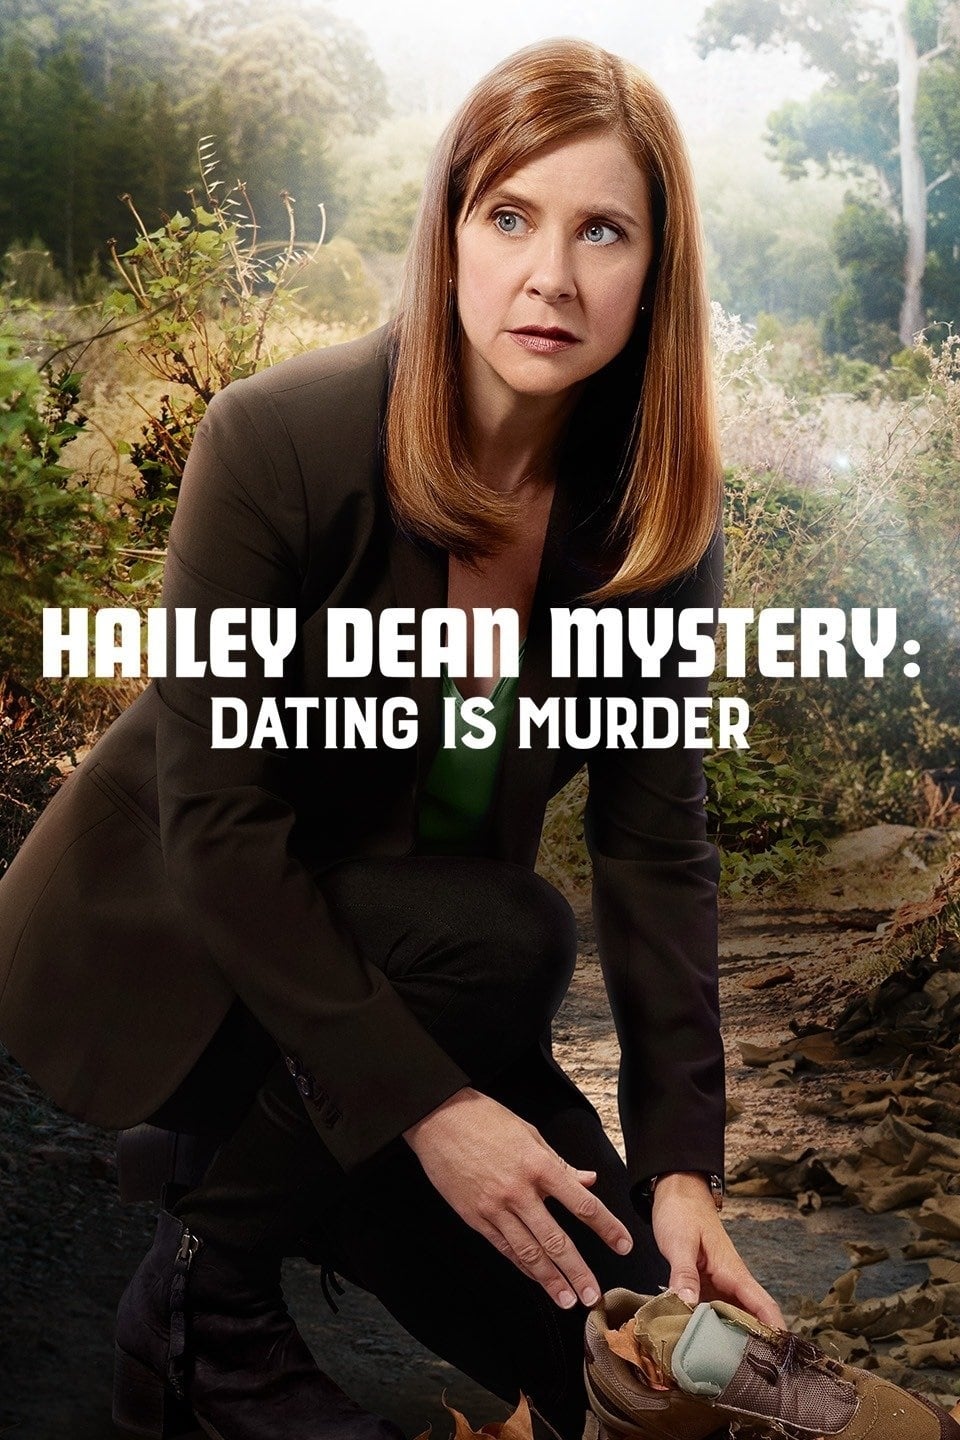 Hailey Dean Mysteries: Dating Is Murder (2017)